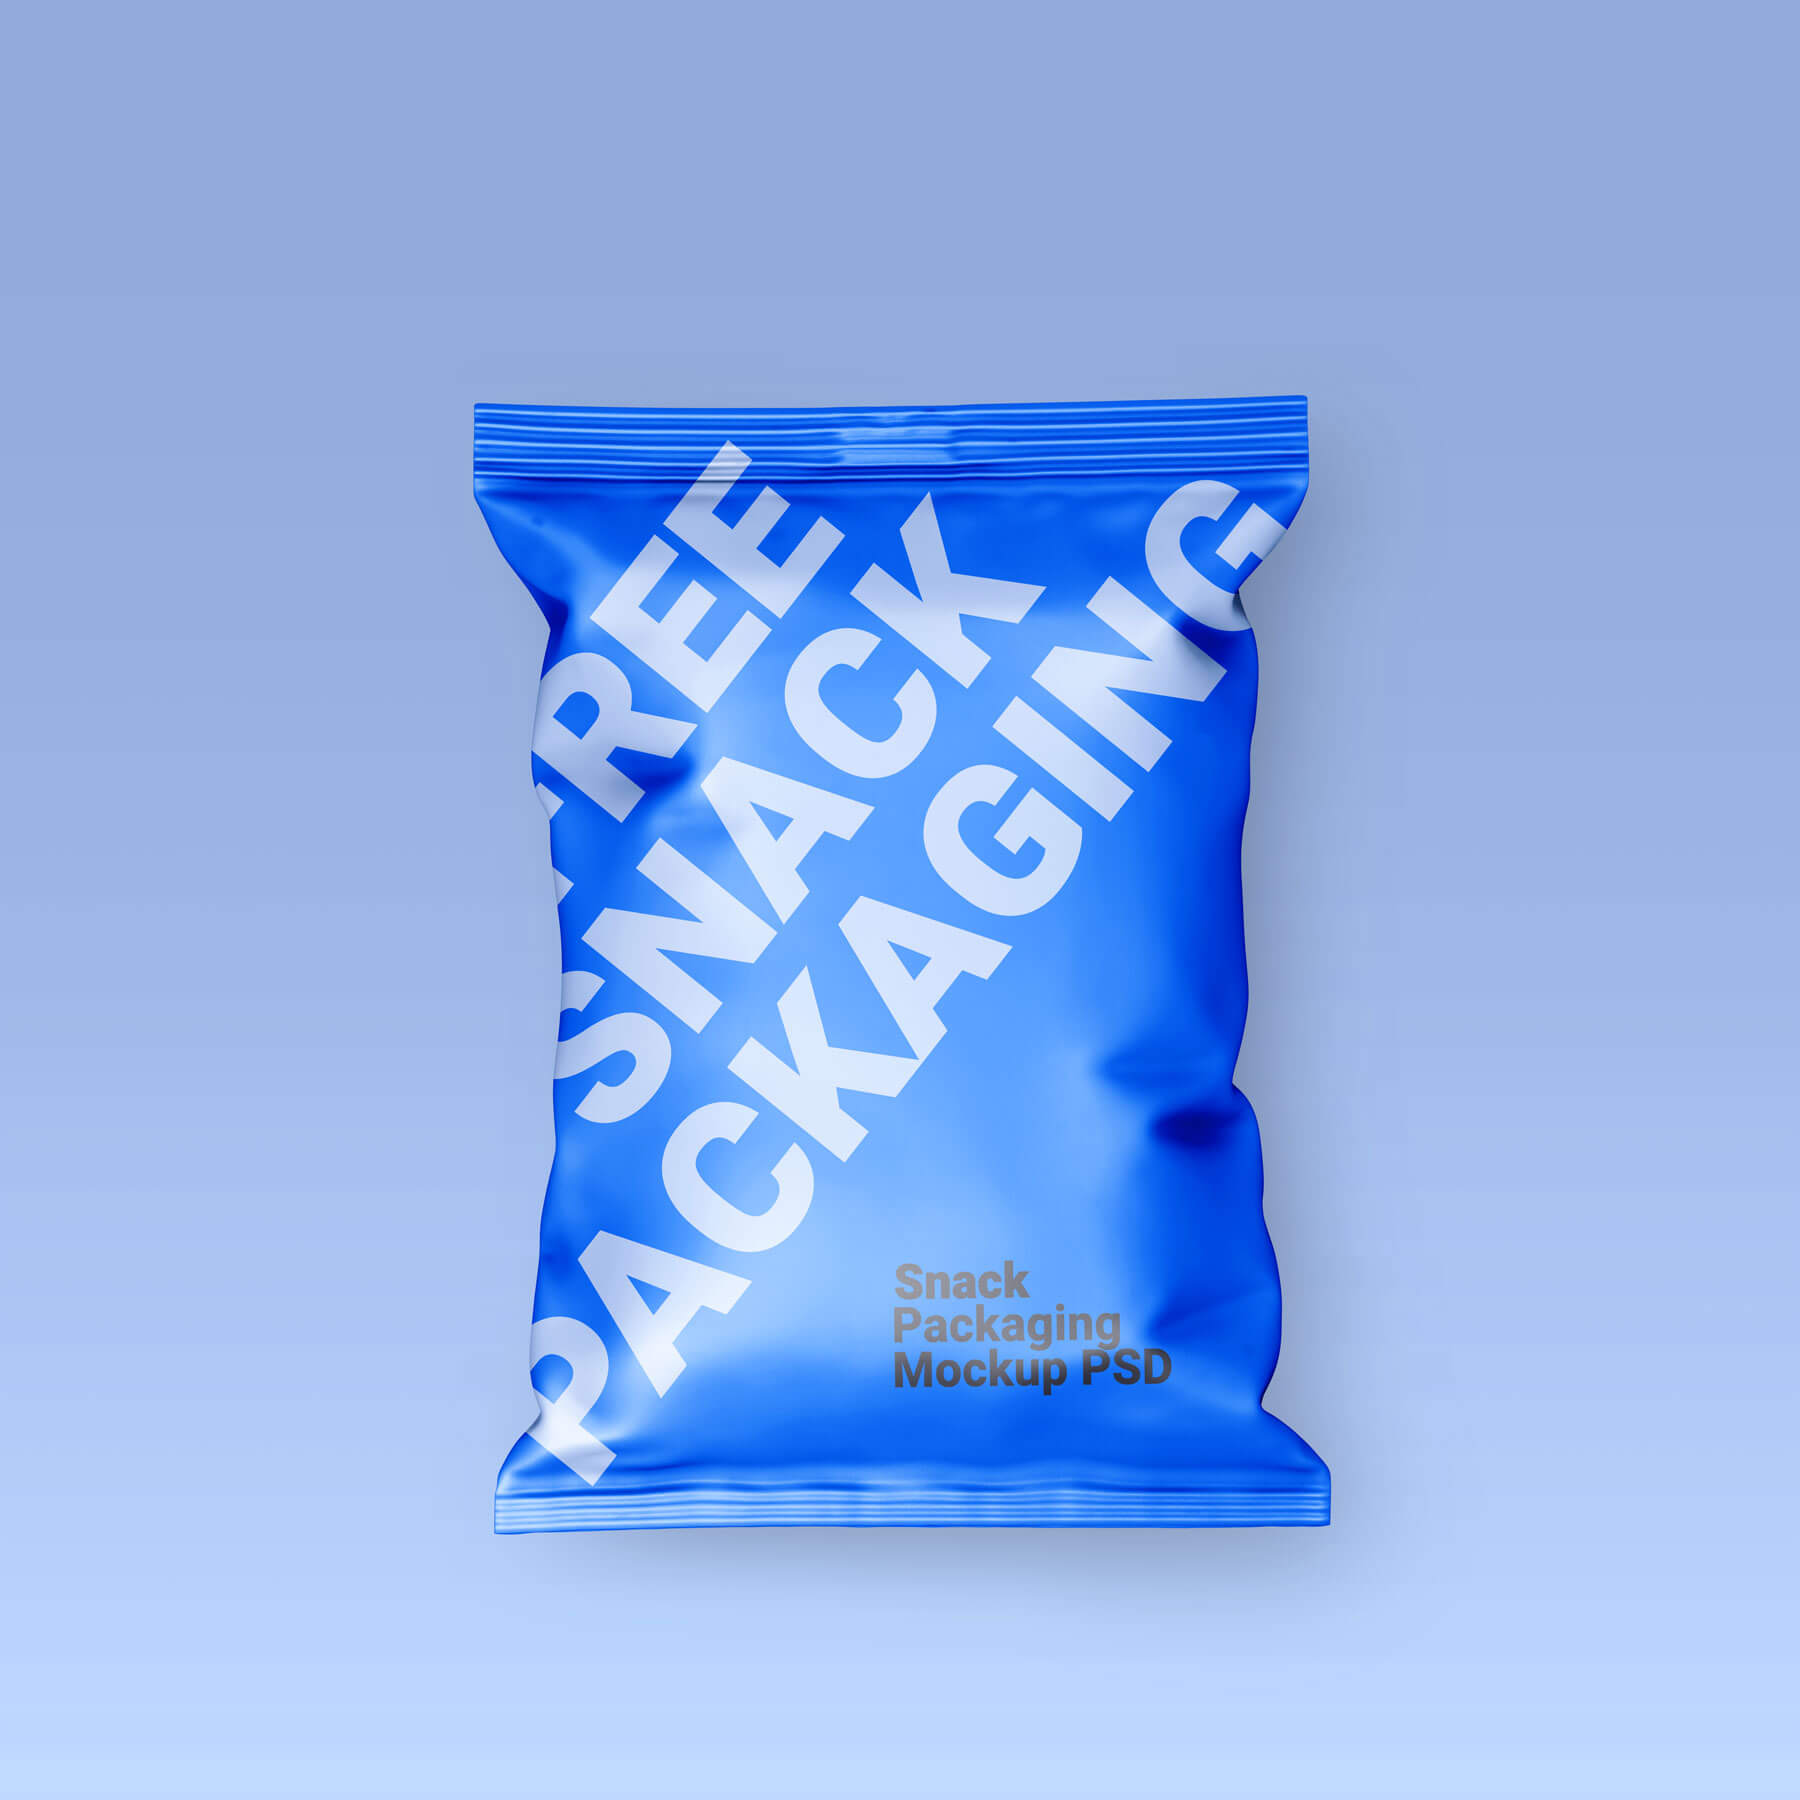 Free Snack Packaging Mockup PSD 01